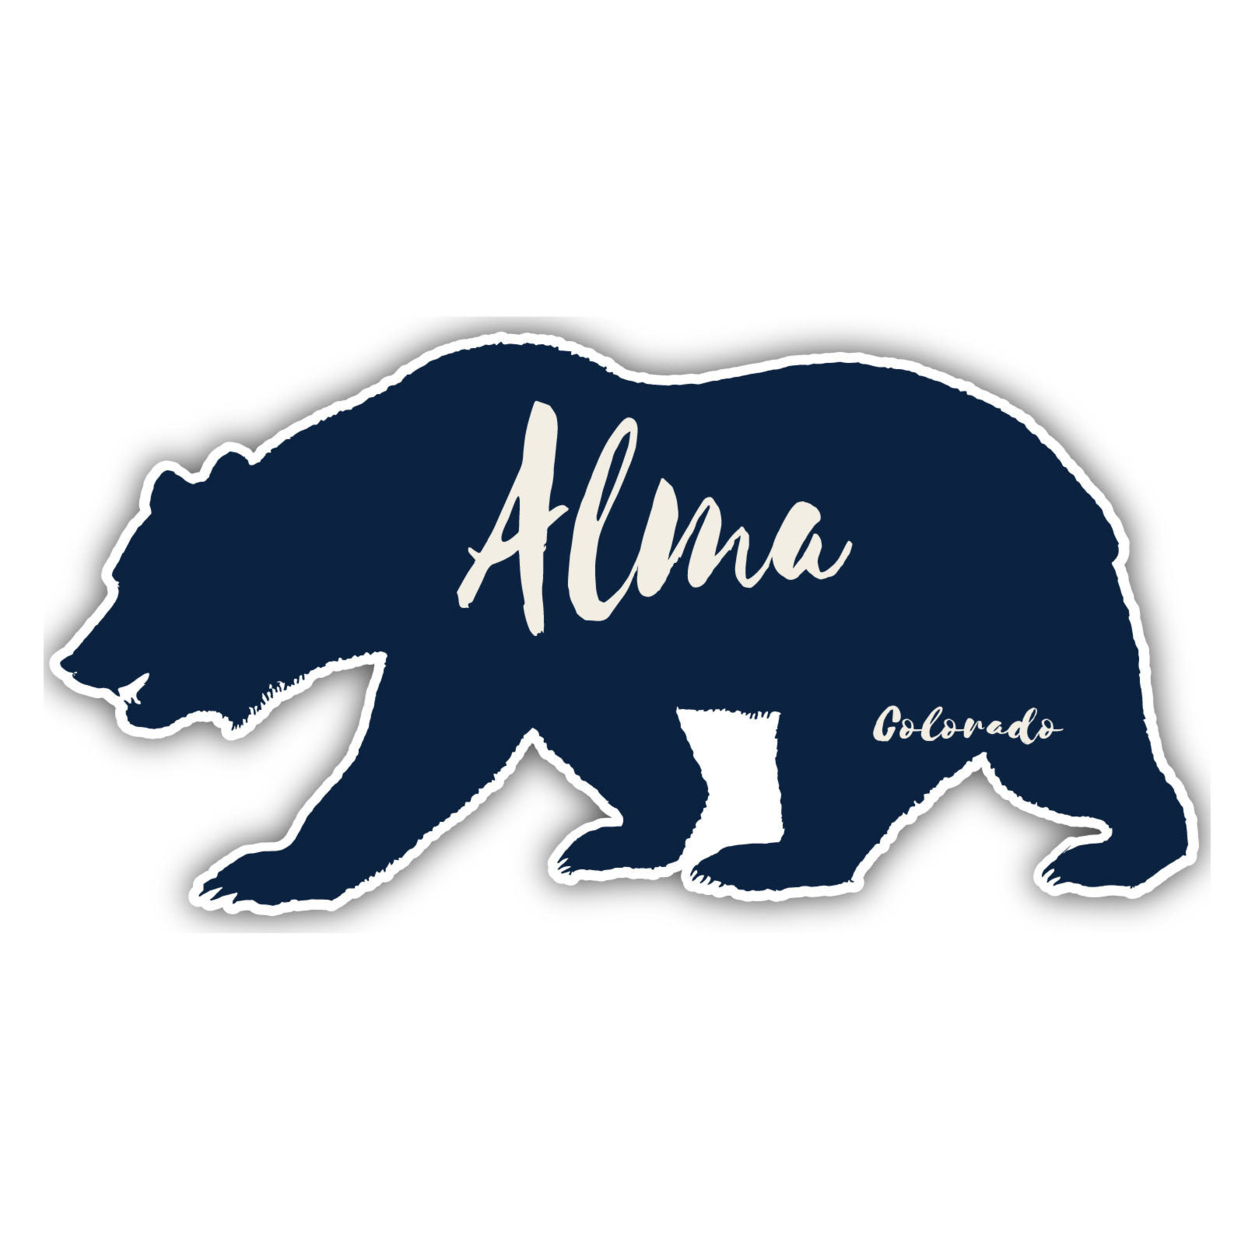 Alma Colorado Souvenir Decorative Stickers (Choose Theme And Size) - 4-Pack, 12-Inch, Adventures Awaits